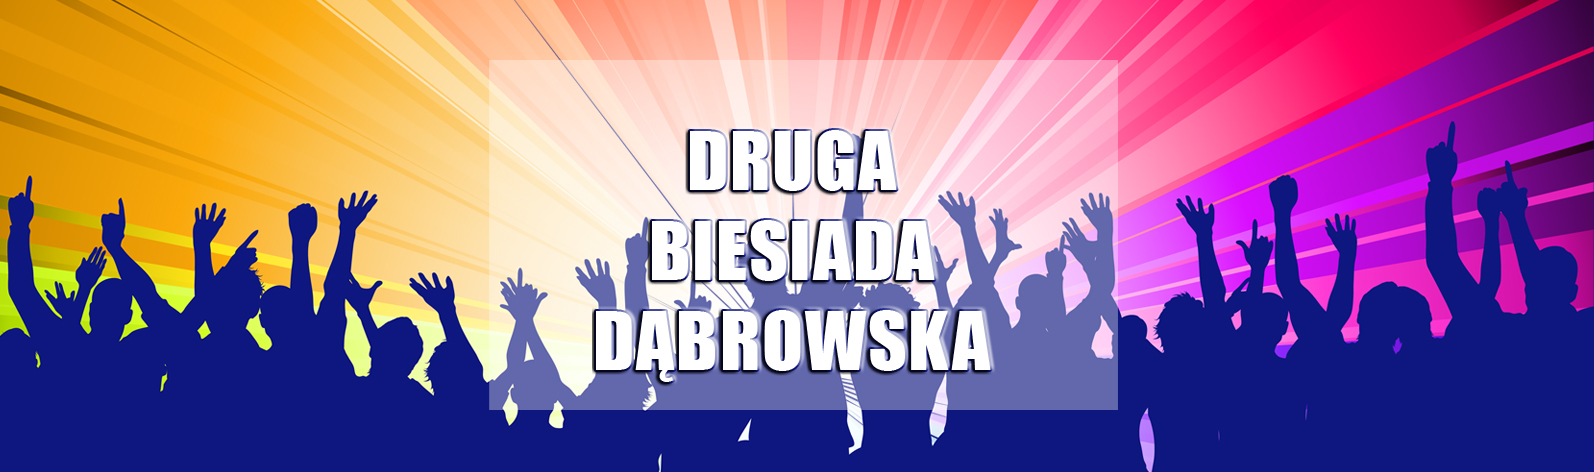 plakat DRUGA biesiada dąbrowska